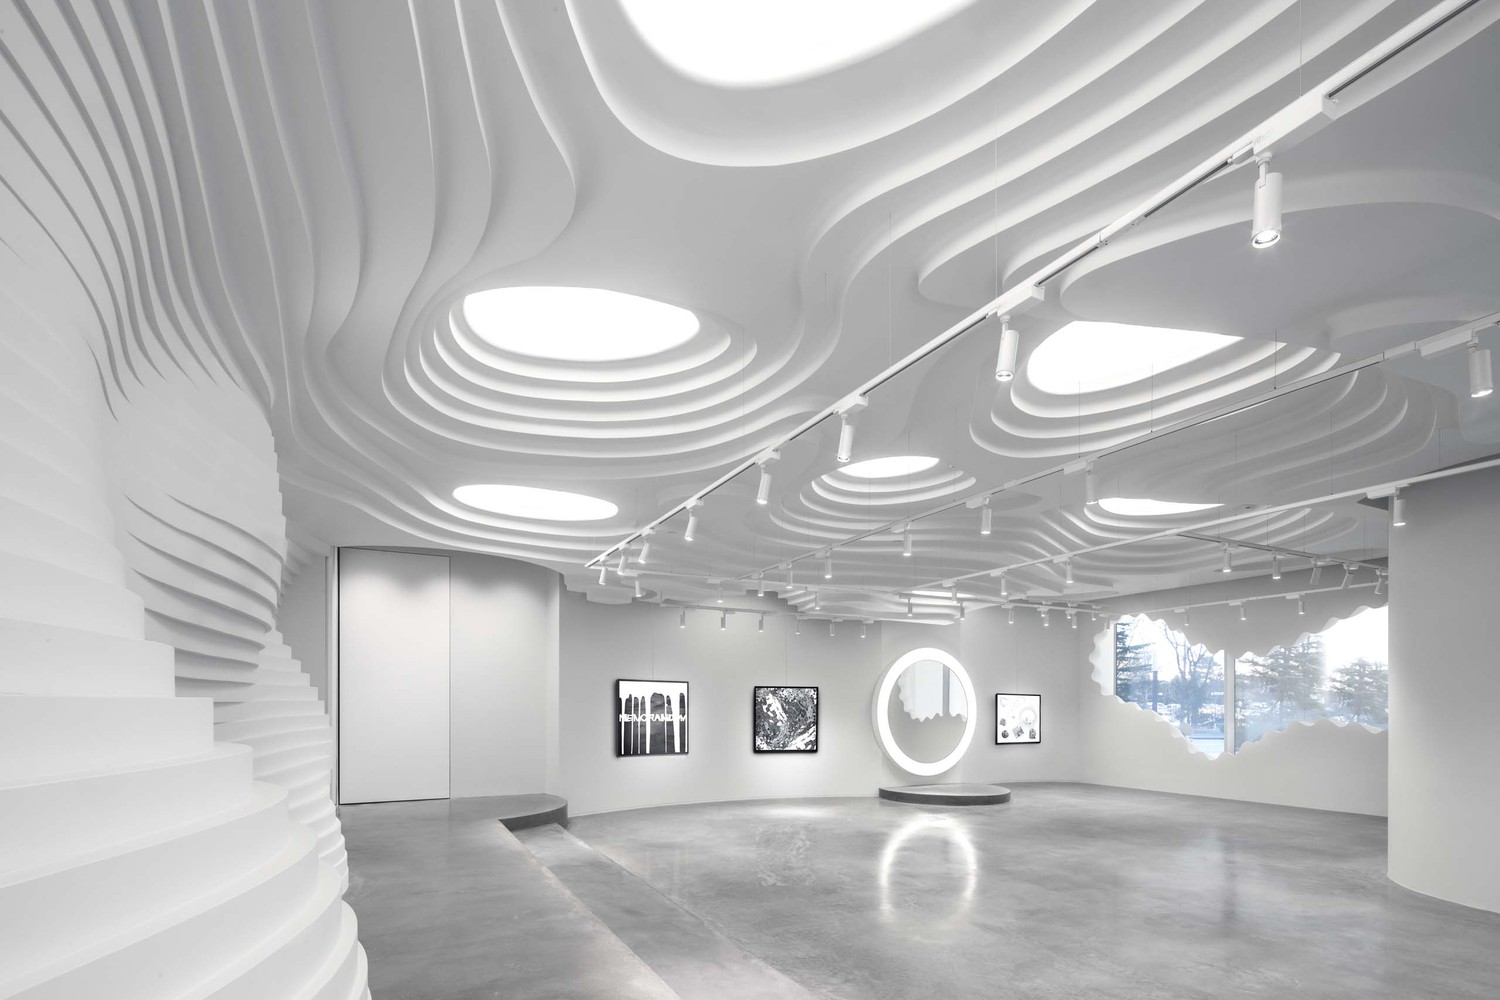 White Cave Gallery’s futuristic curvy interior designed by 123 Architects